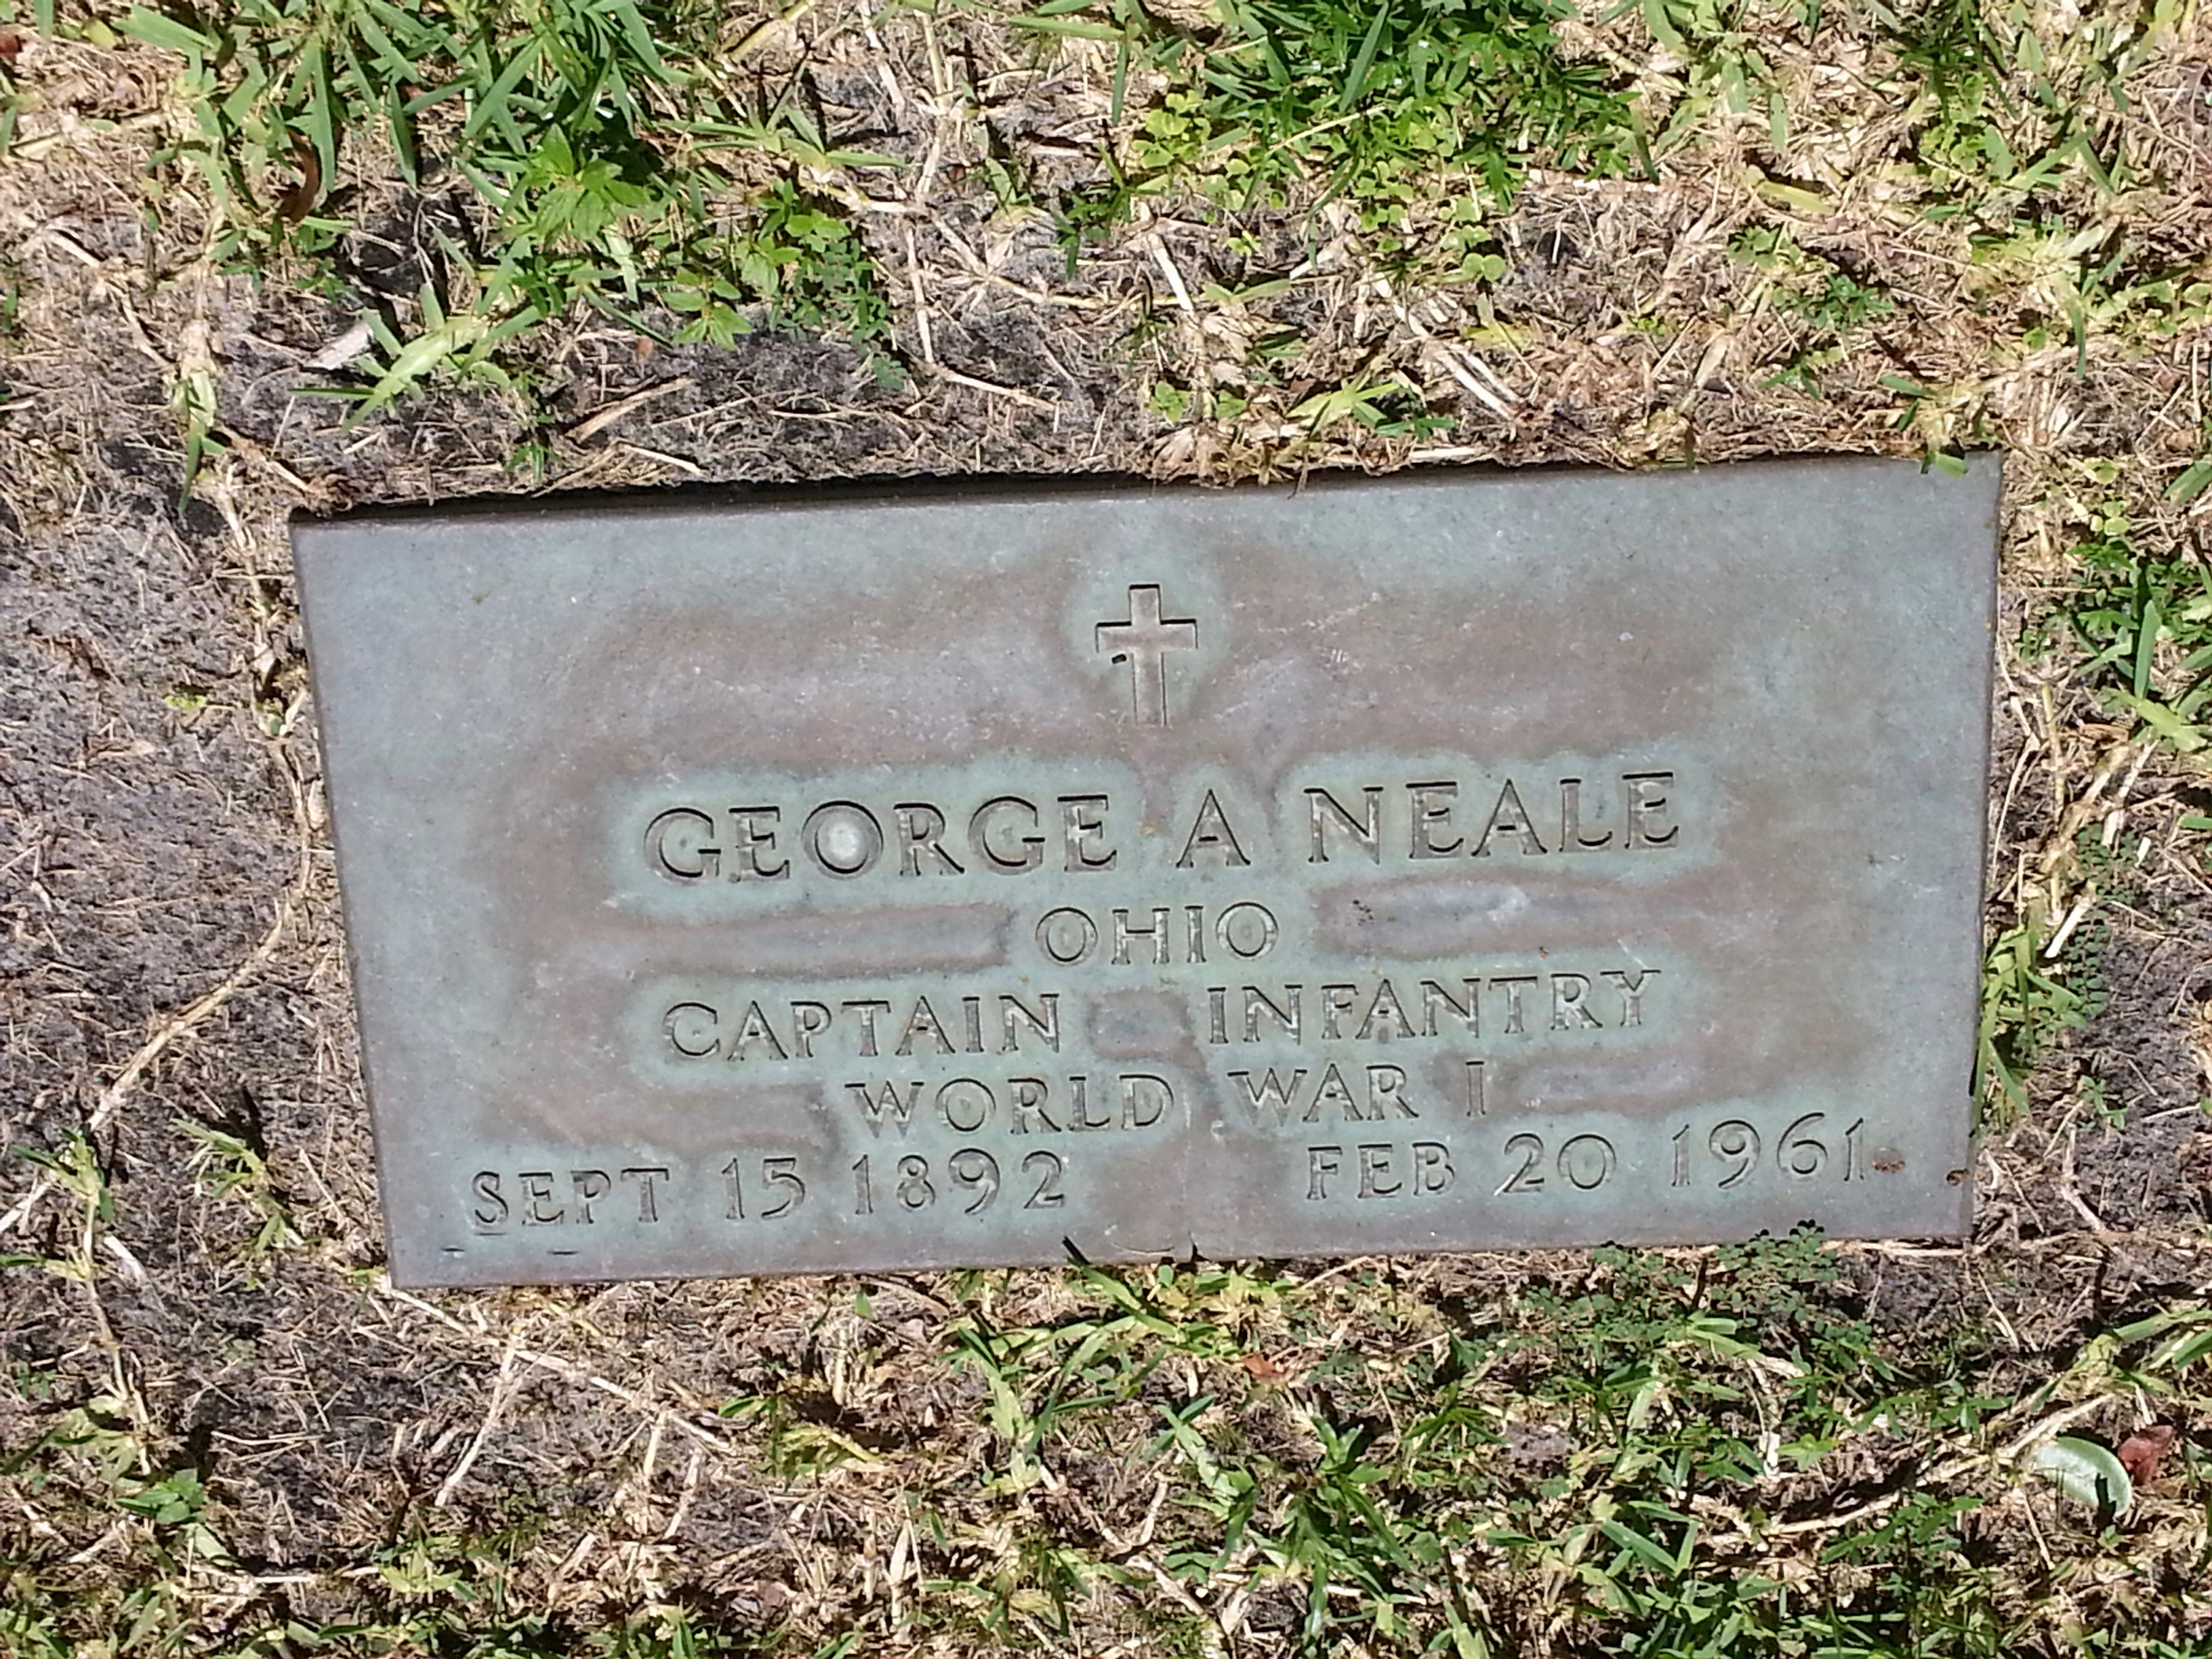 George A Neale